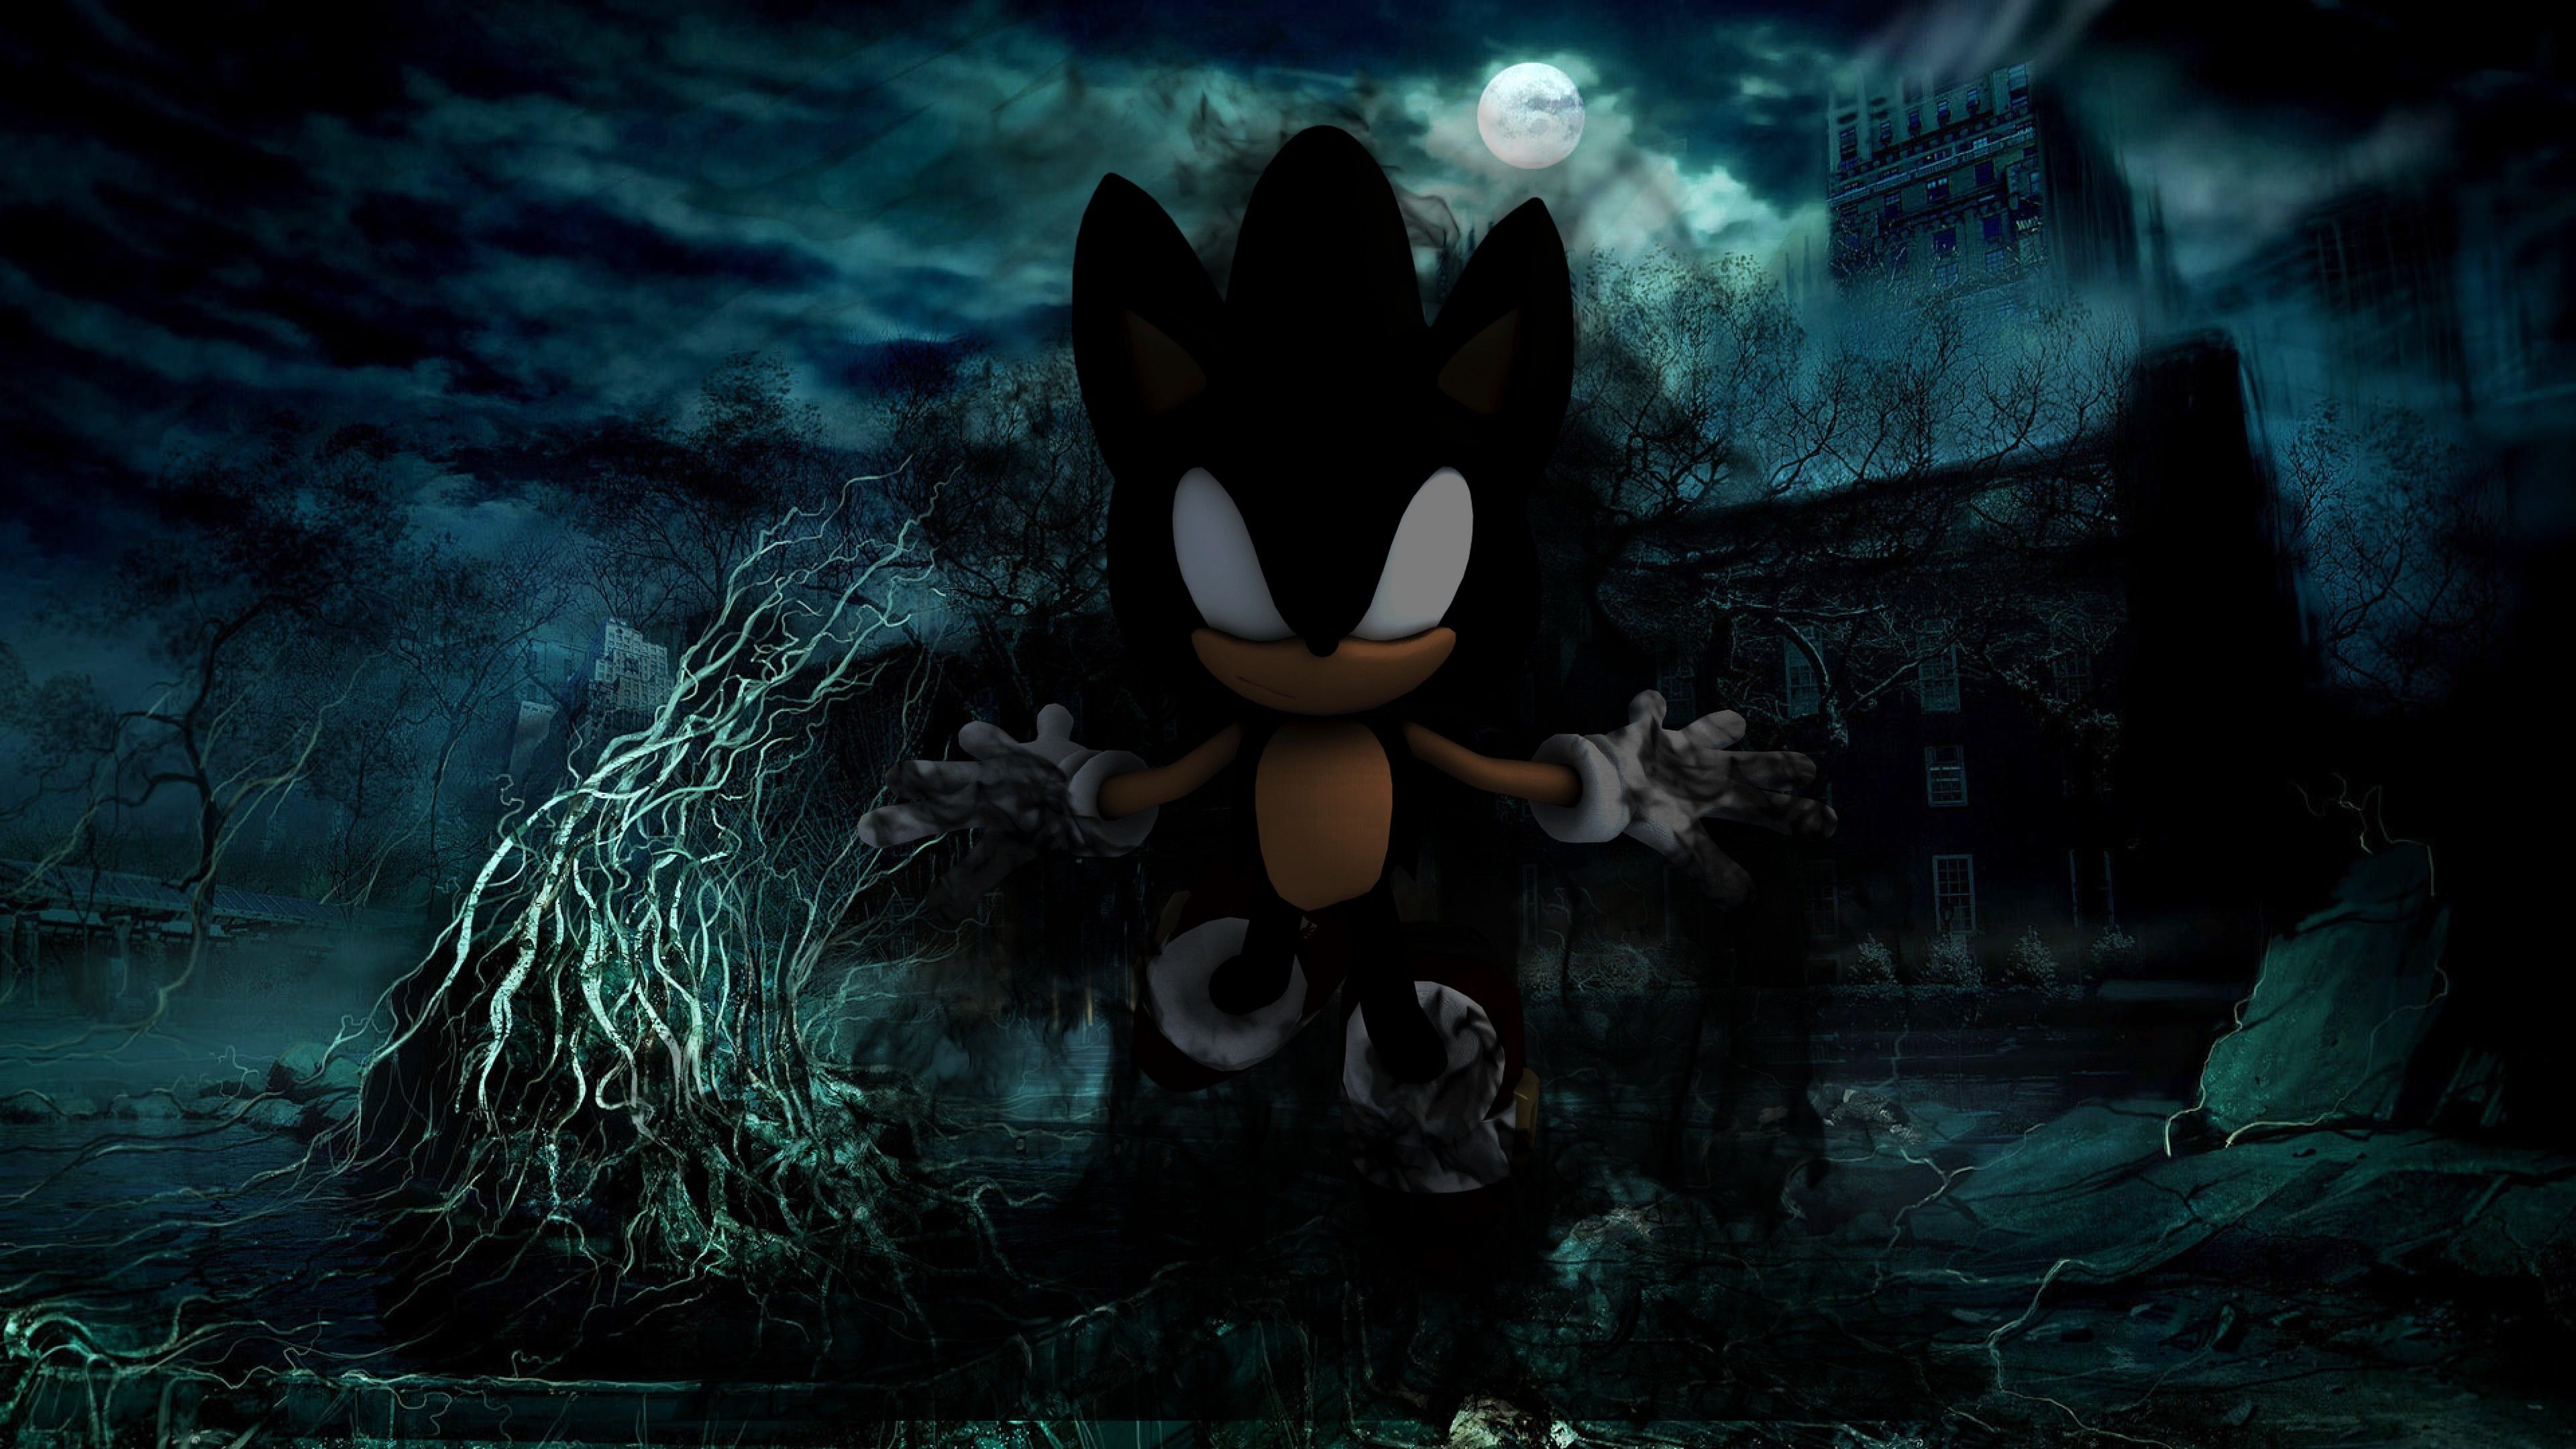 Dark Sonic Wallpaper